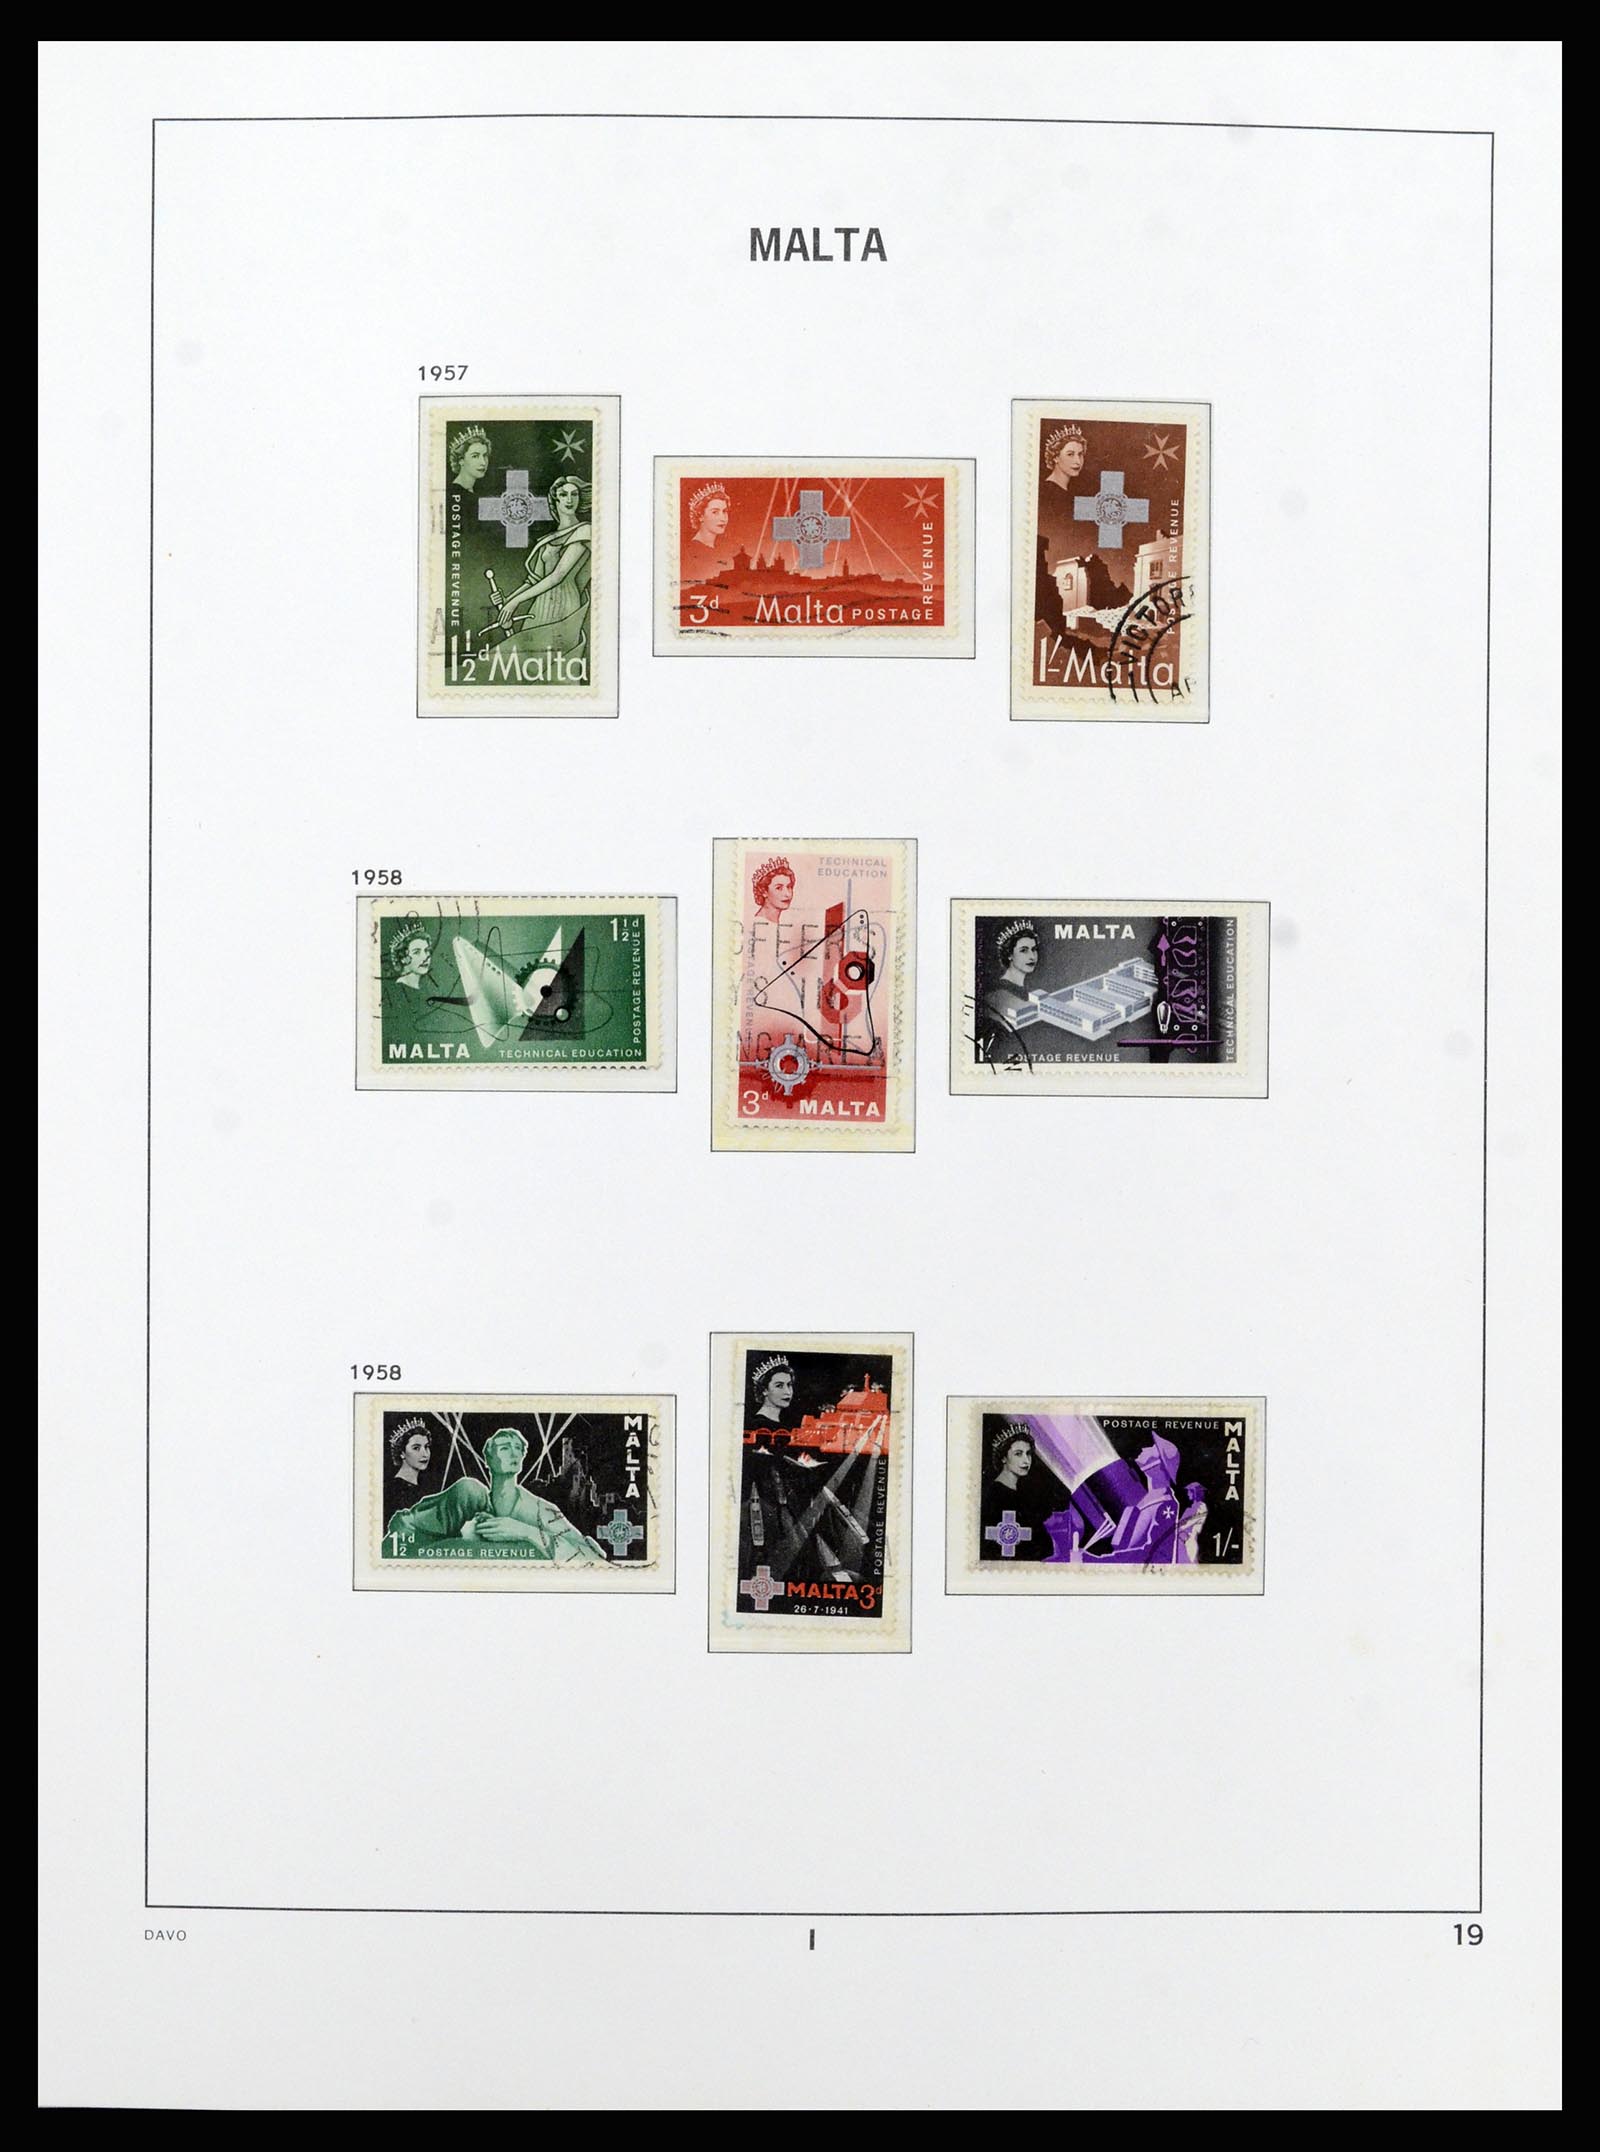 37212 019 - Stamp collection 37212 Malta 1863-1989.